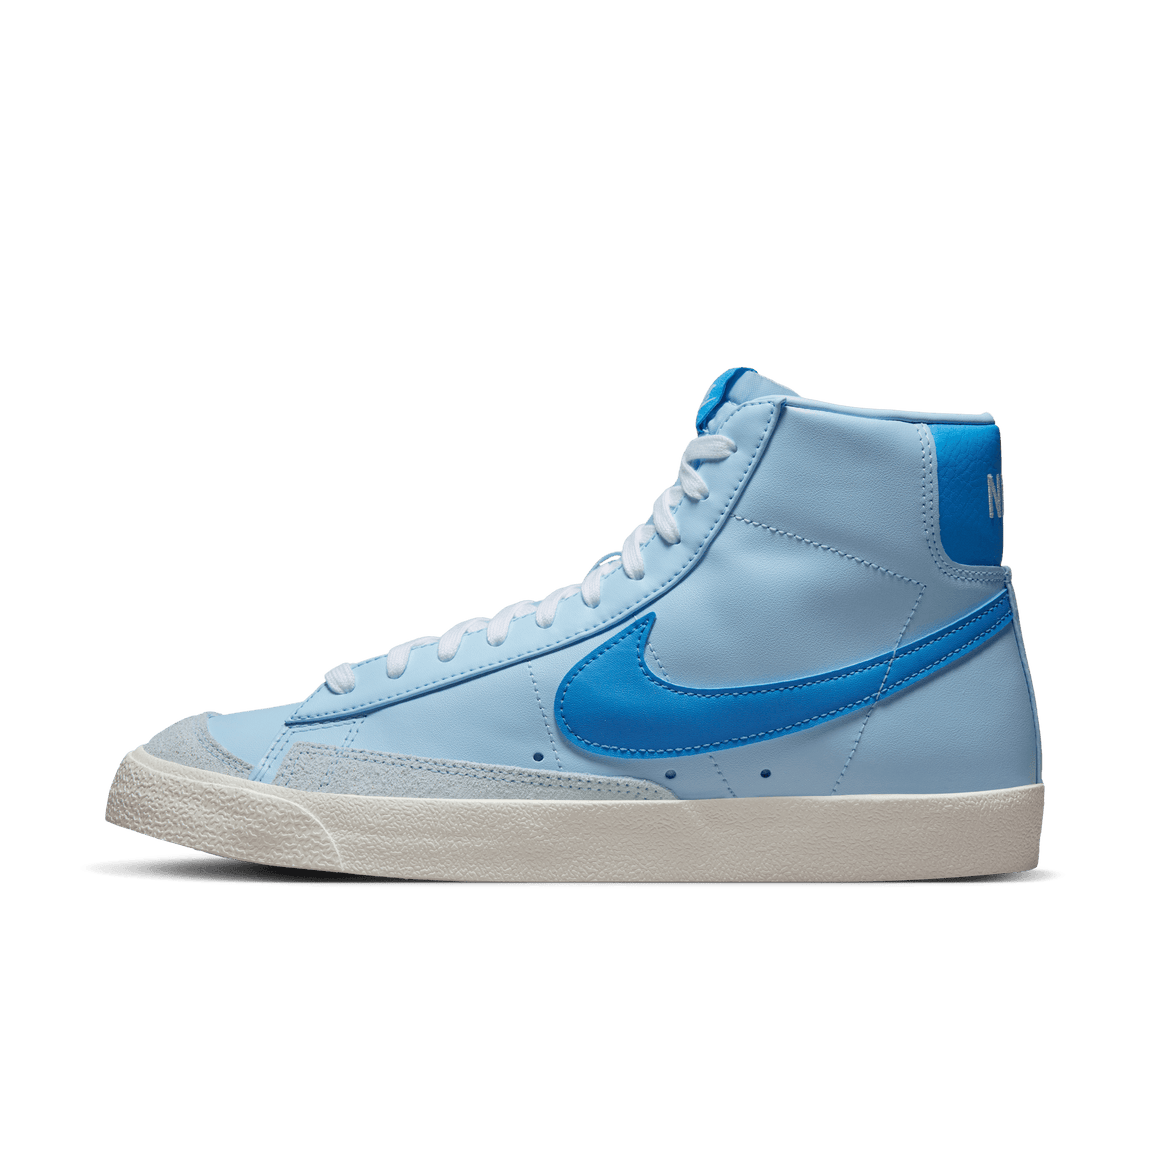 Nike Blazer Mid '77 VNTG (Celestine Blue/University Blue-Sail) - Nike Blazer Mid '77 VNTG (Celestine Blue/University Blue-Sail) - 